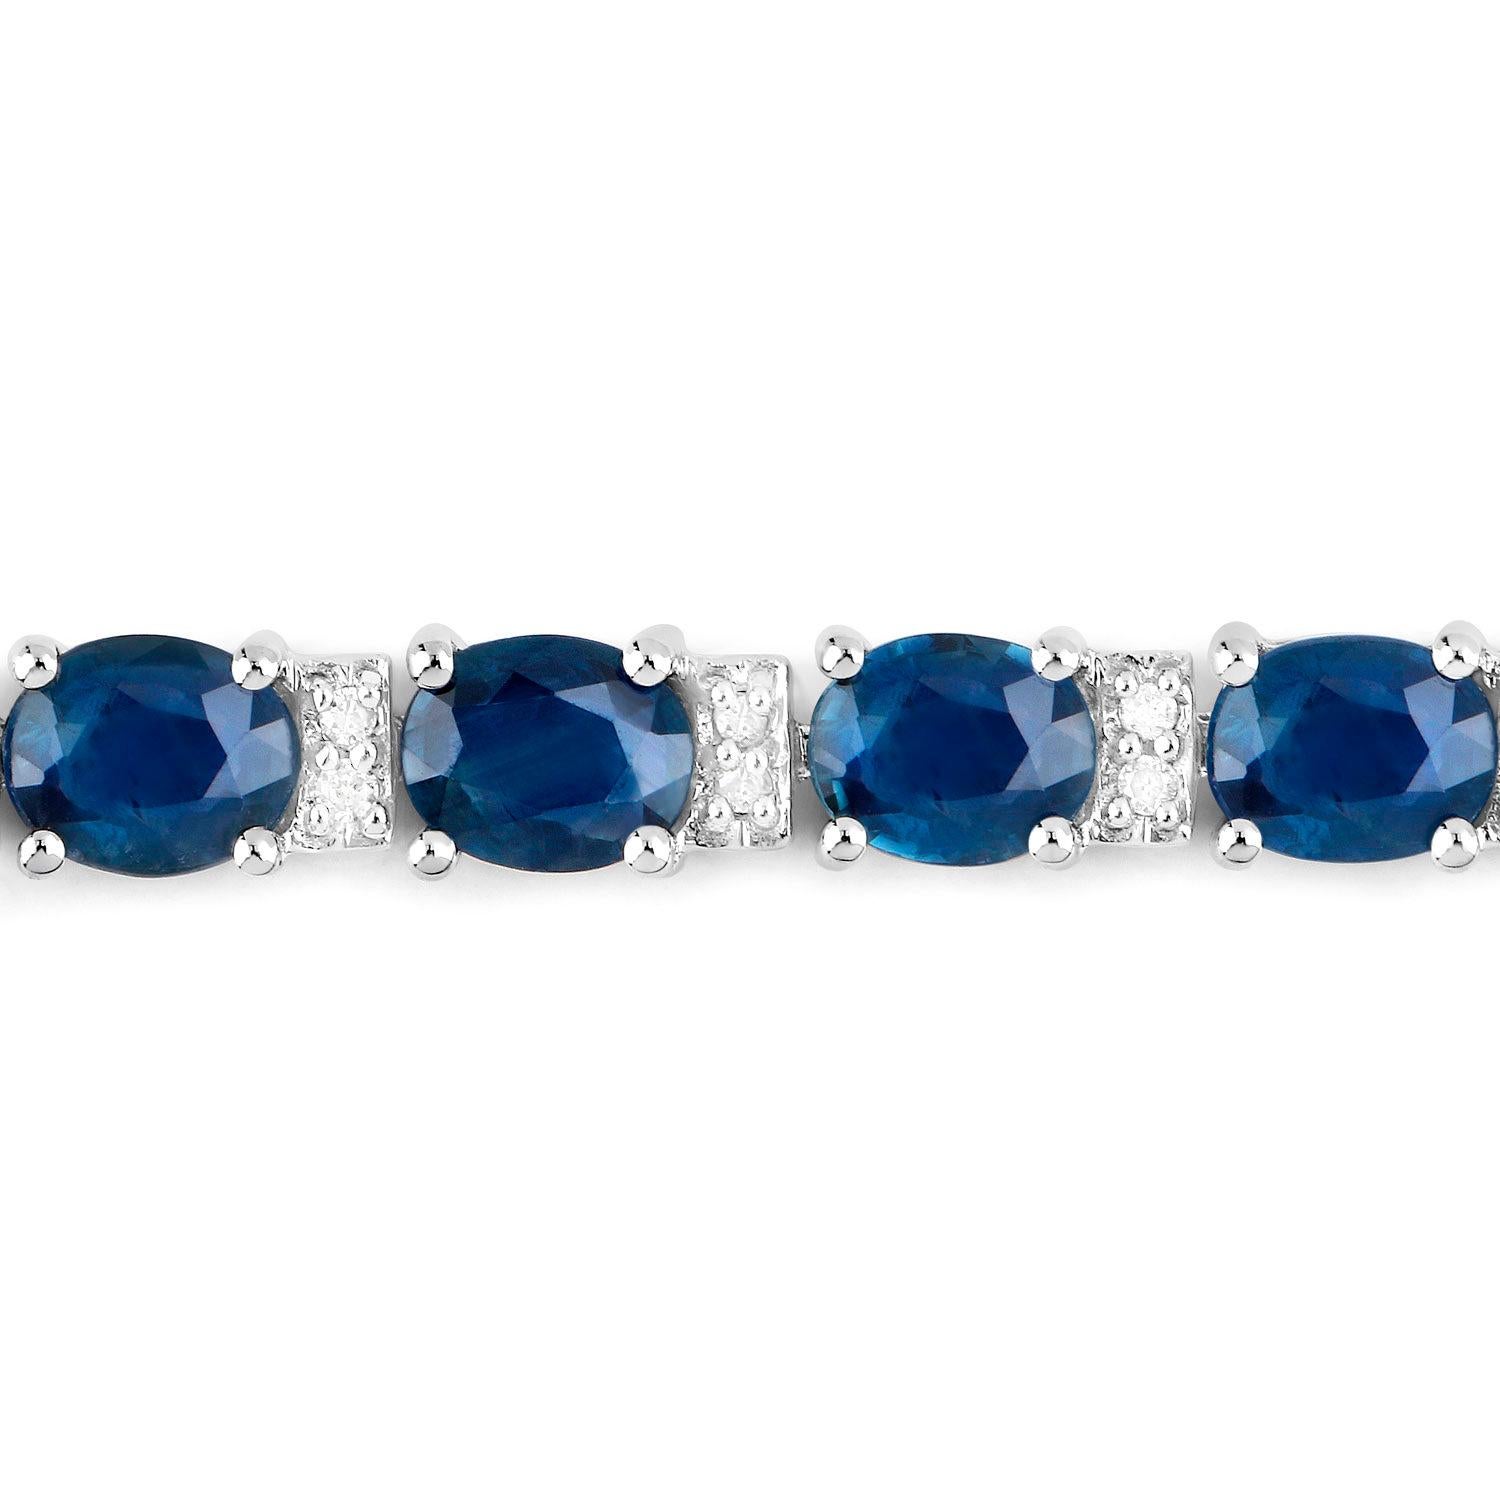 Contemporary Blue Sapphire Bracelet Diamond Links 9.1 Carats 14K Gold For Sale